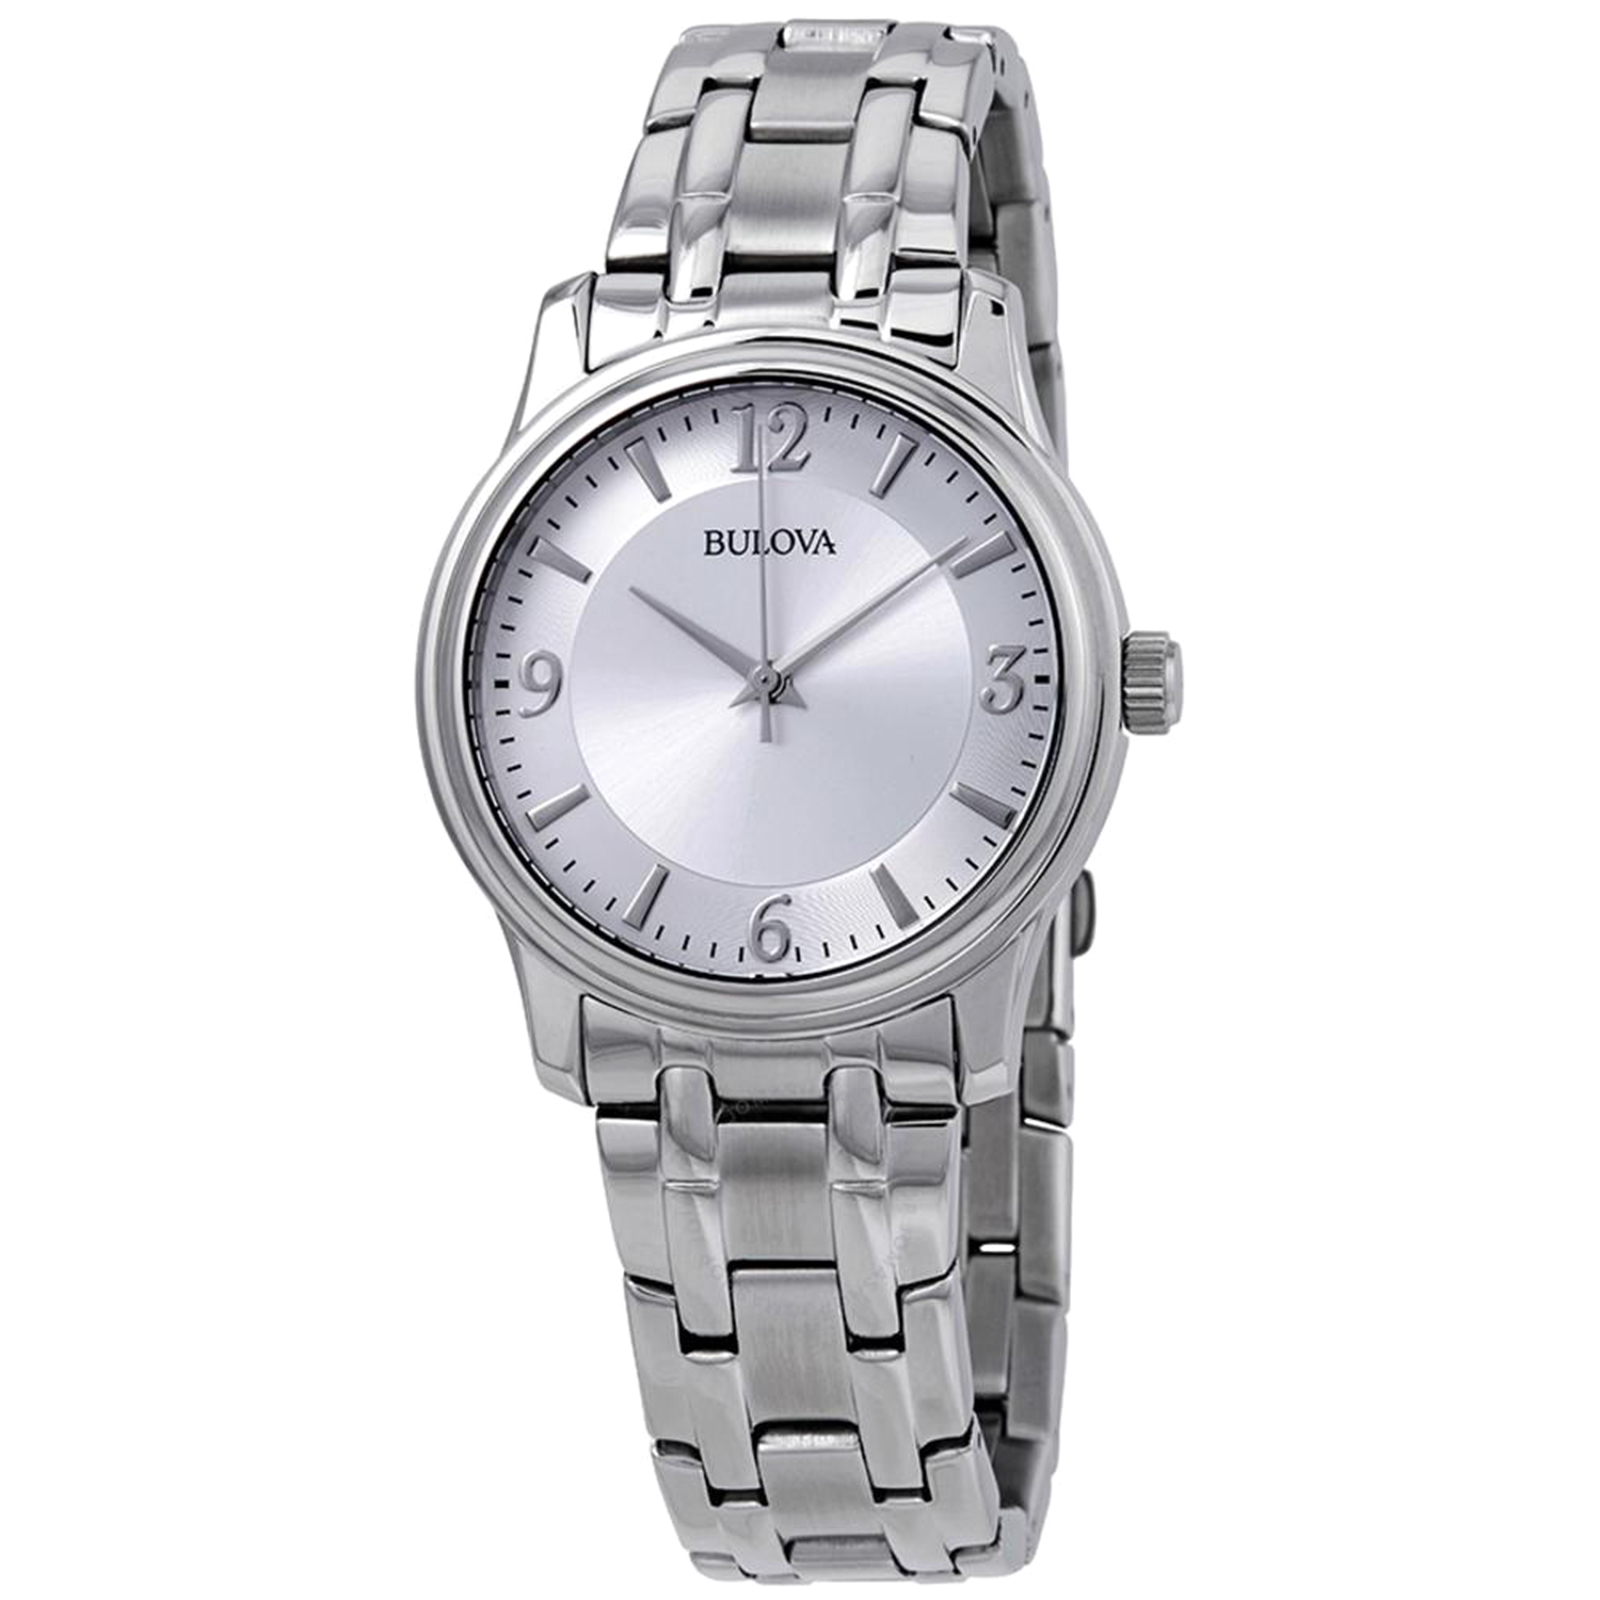 Bulova Men's Corporate Exclusive 96A000 Stainless-Steel Quartz Watch - Silver